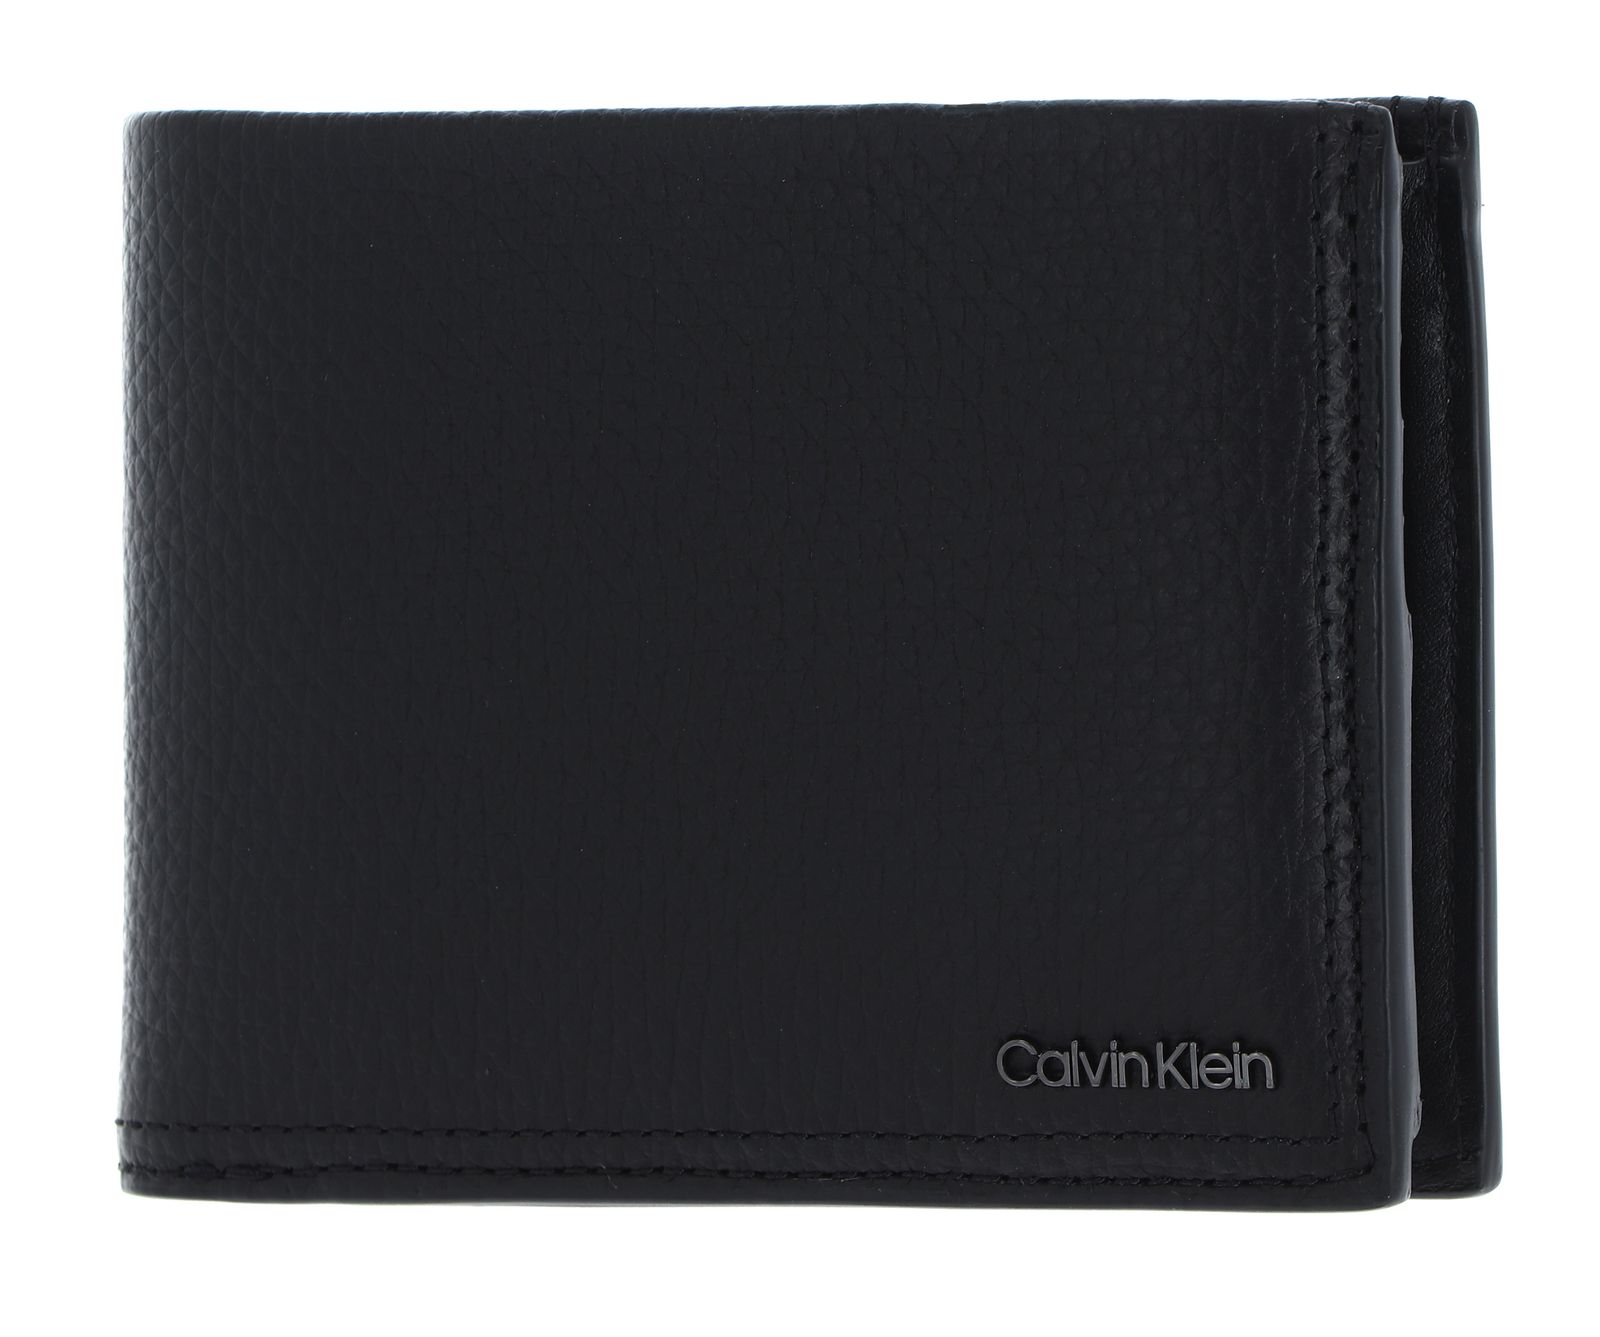 Calvin Klein Minimalism Trifold 10CC Black modeherz accessories | W CK | Coin online bags, purses & Buy 